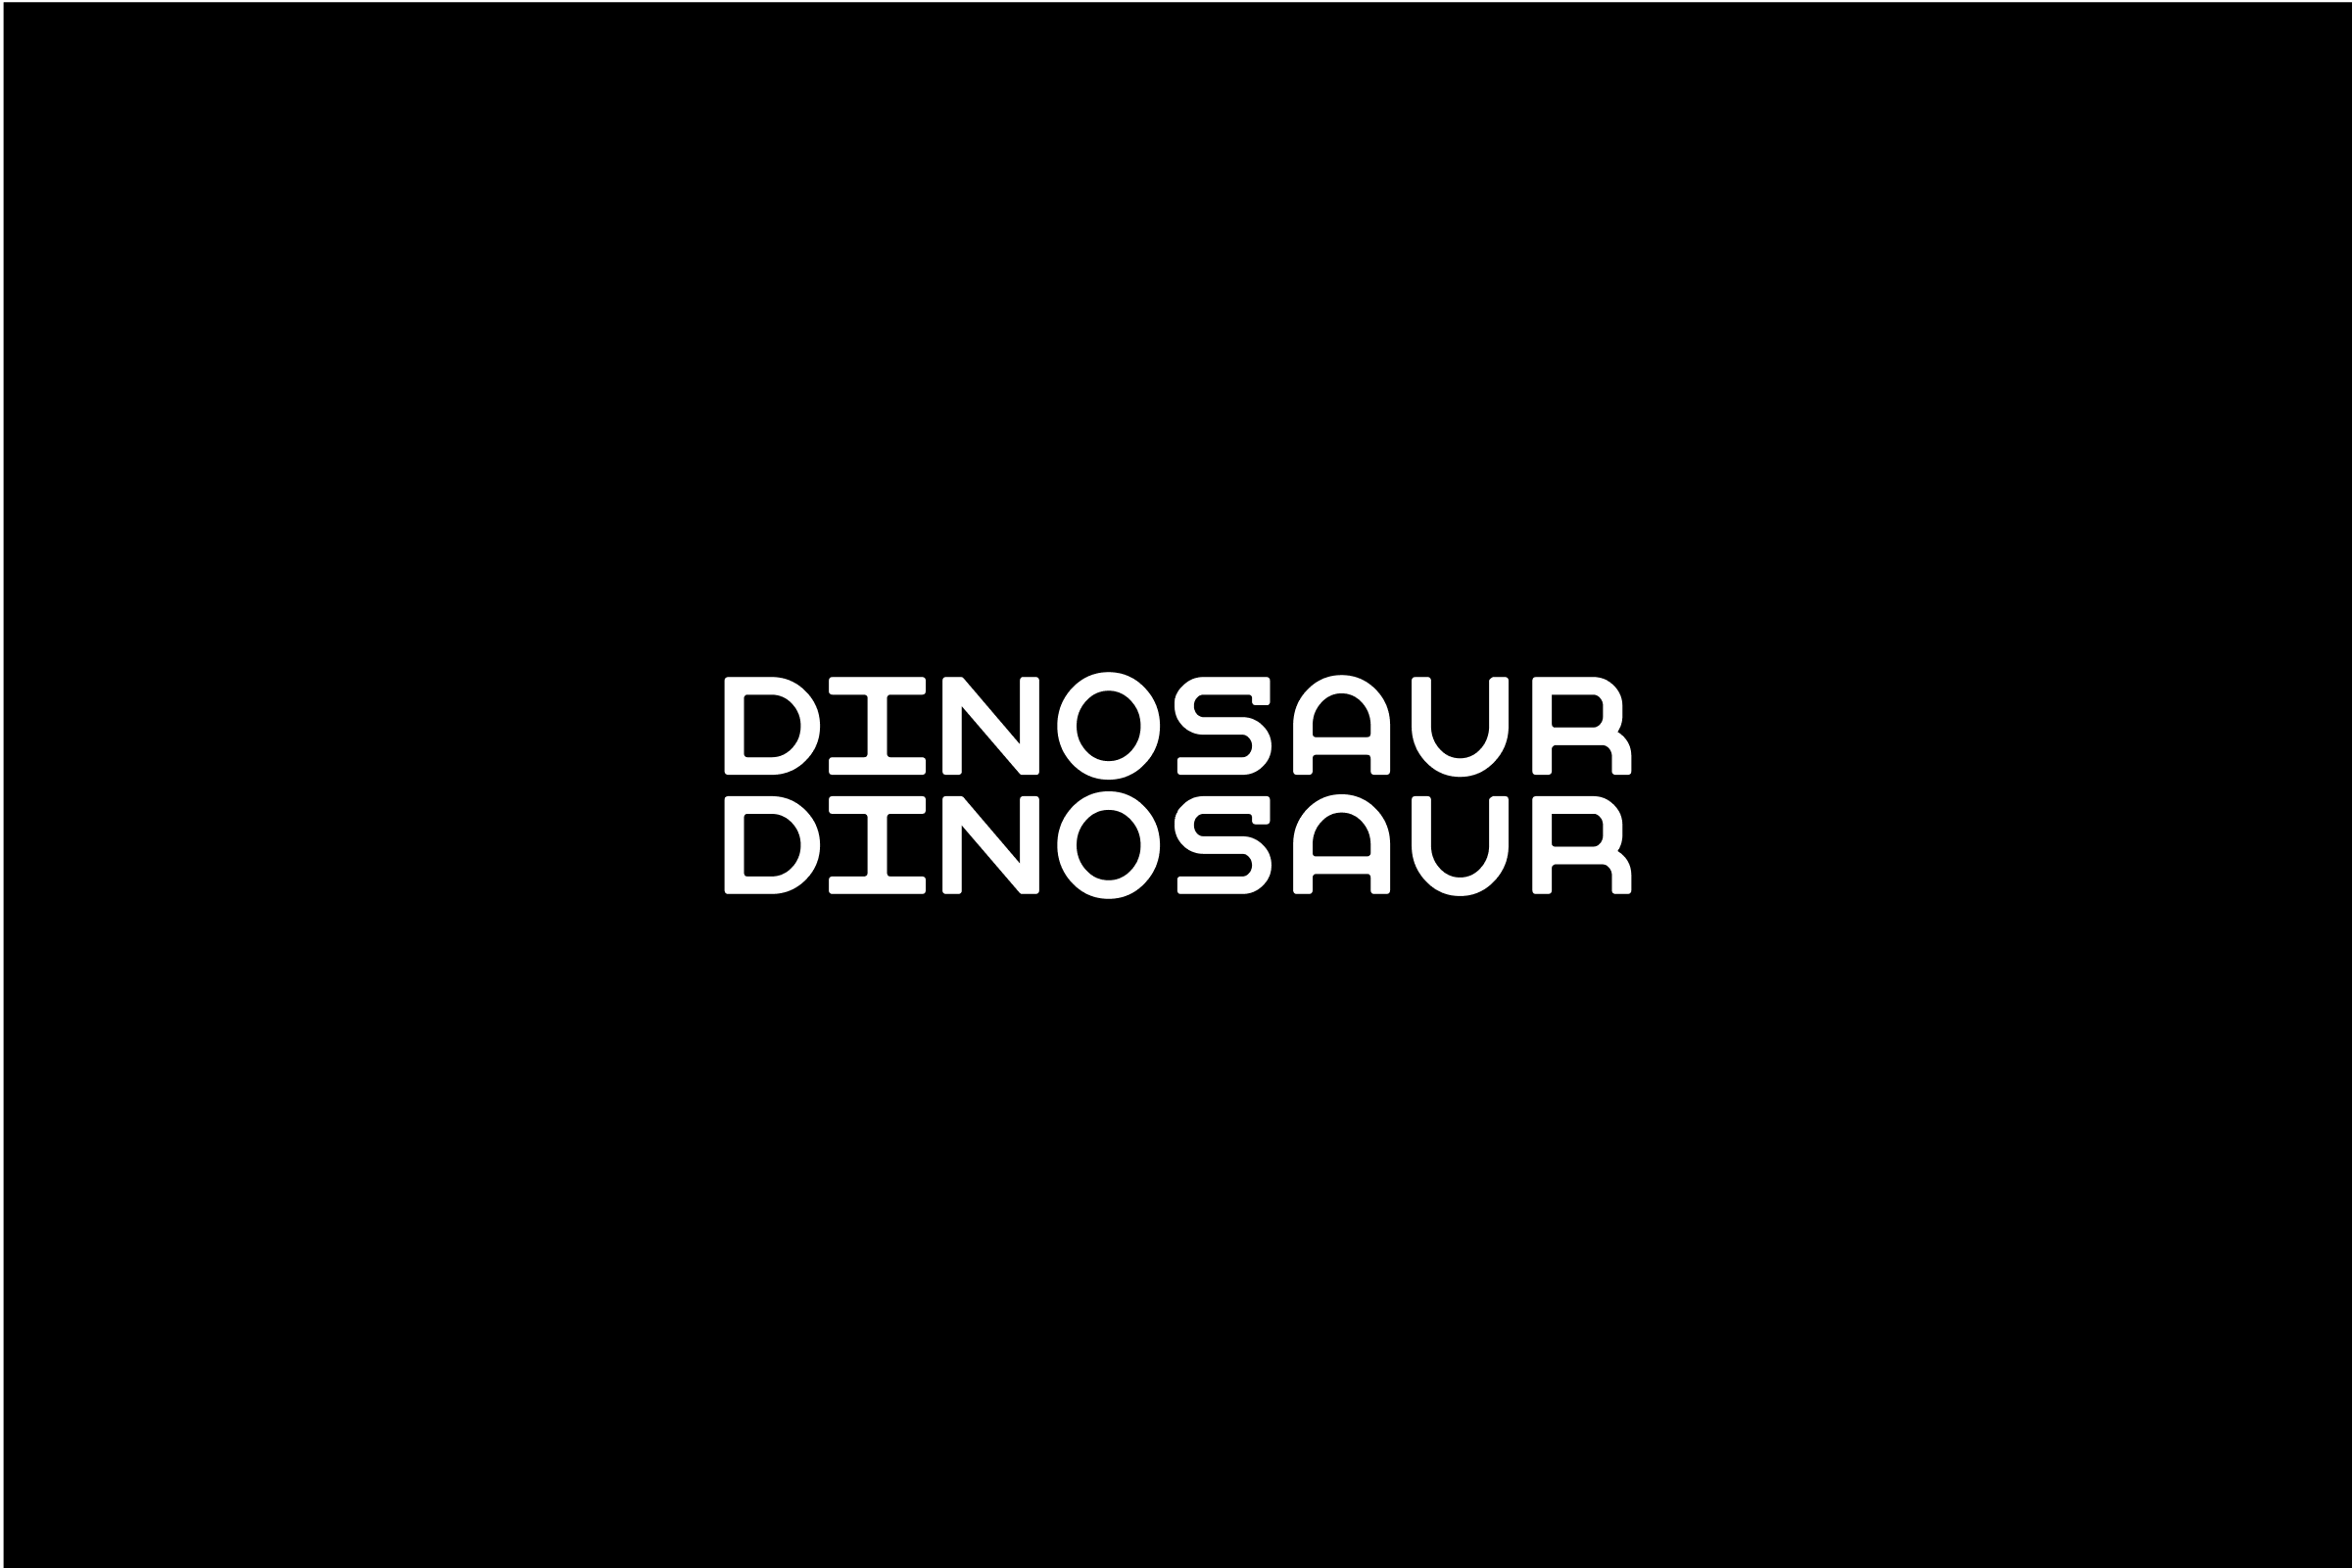 simon-p-coyle-branding-logo-design-2014-dinosaur-dinosaur